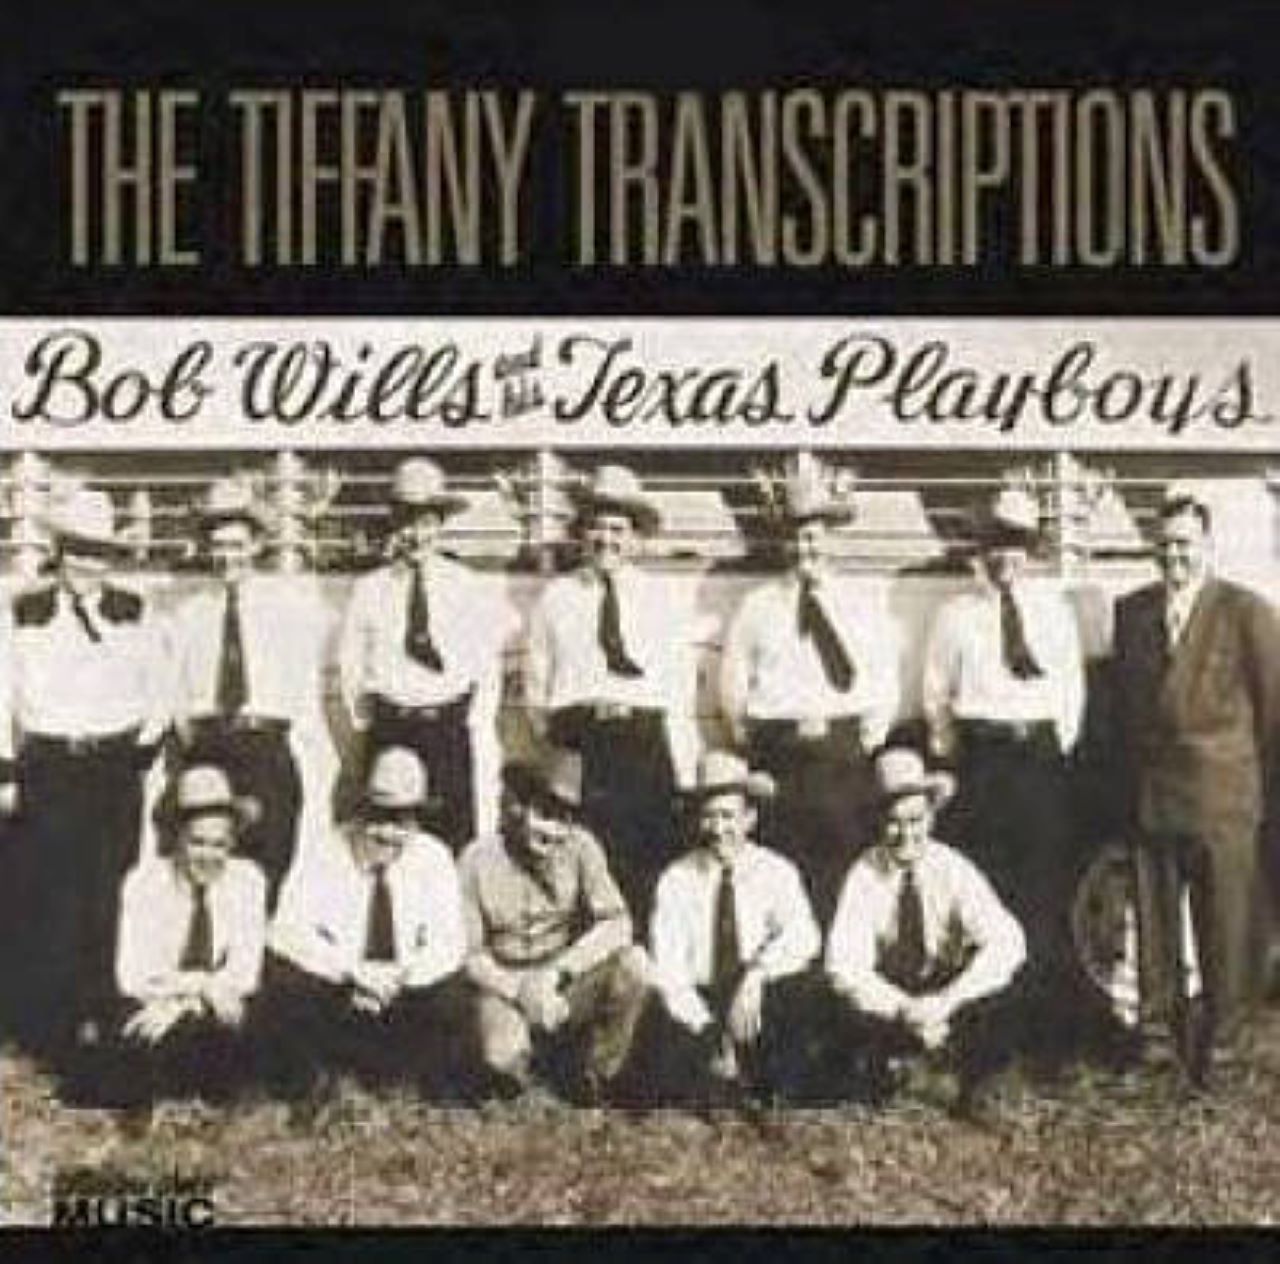 Bob Wills – The Tiffany Transcriptions cover album